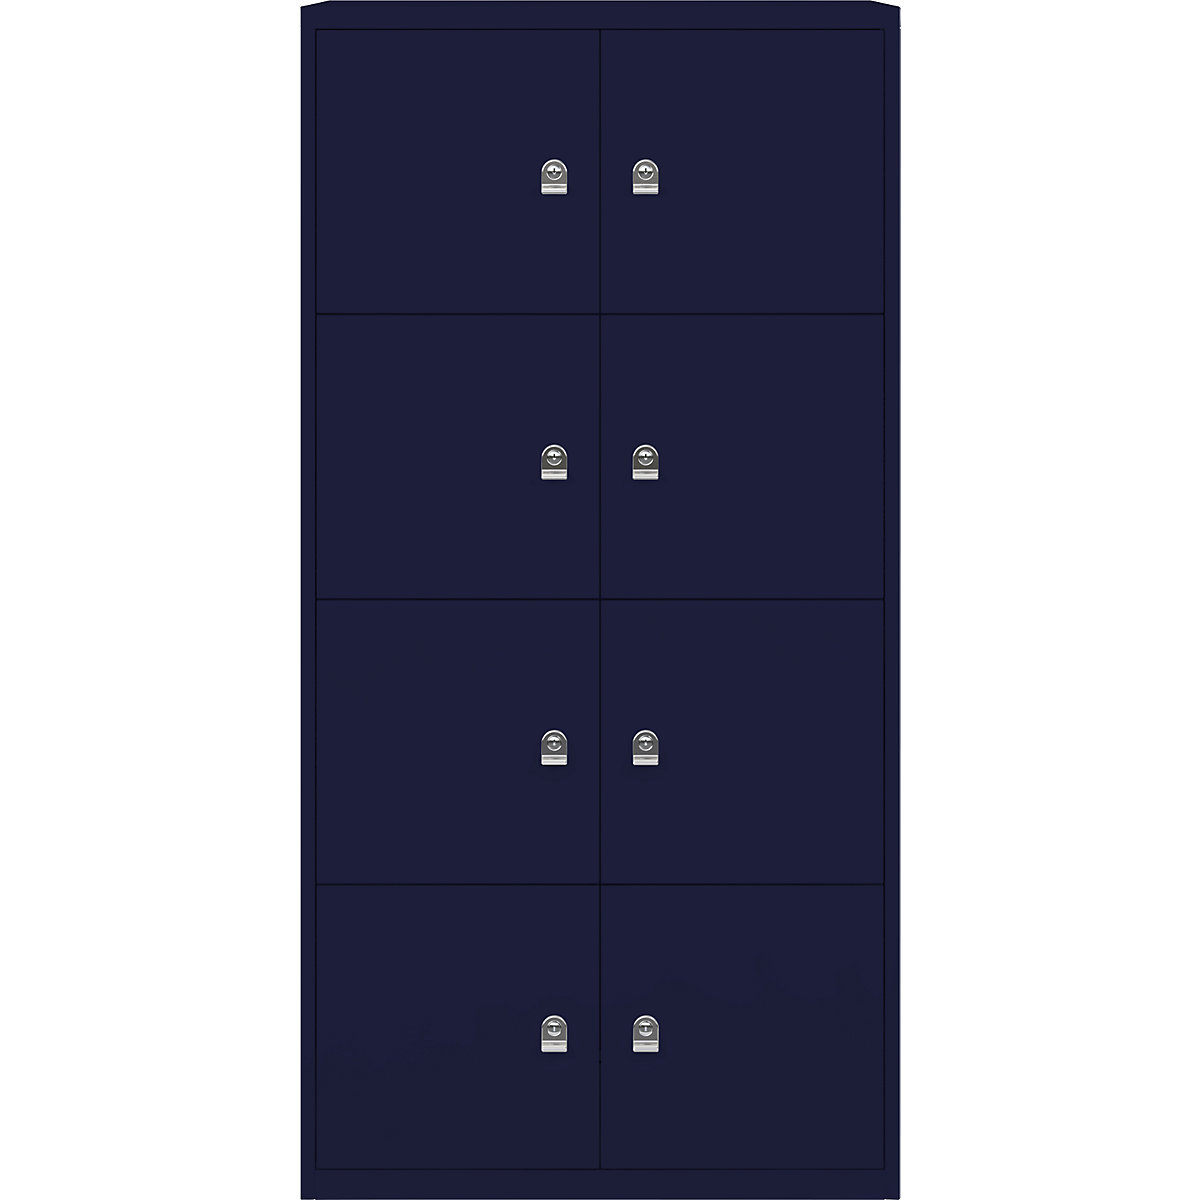 LateralFile™ Lodge – BISLEY, s 8 uzamykacími priehradkami, výška po 375 mm, oxfordská modrá-19